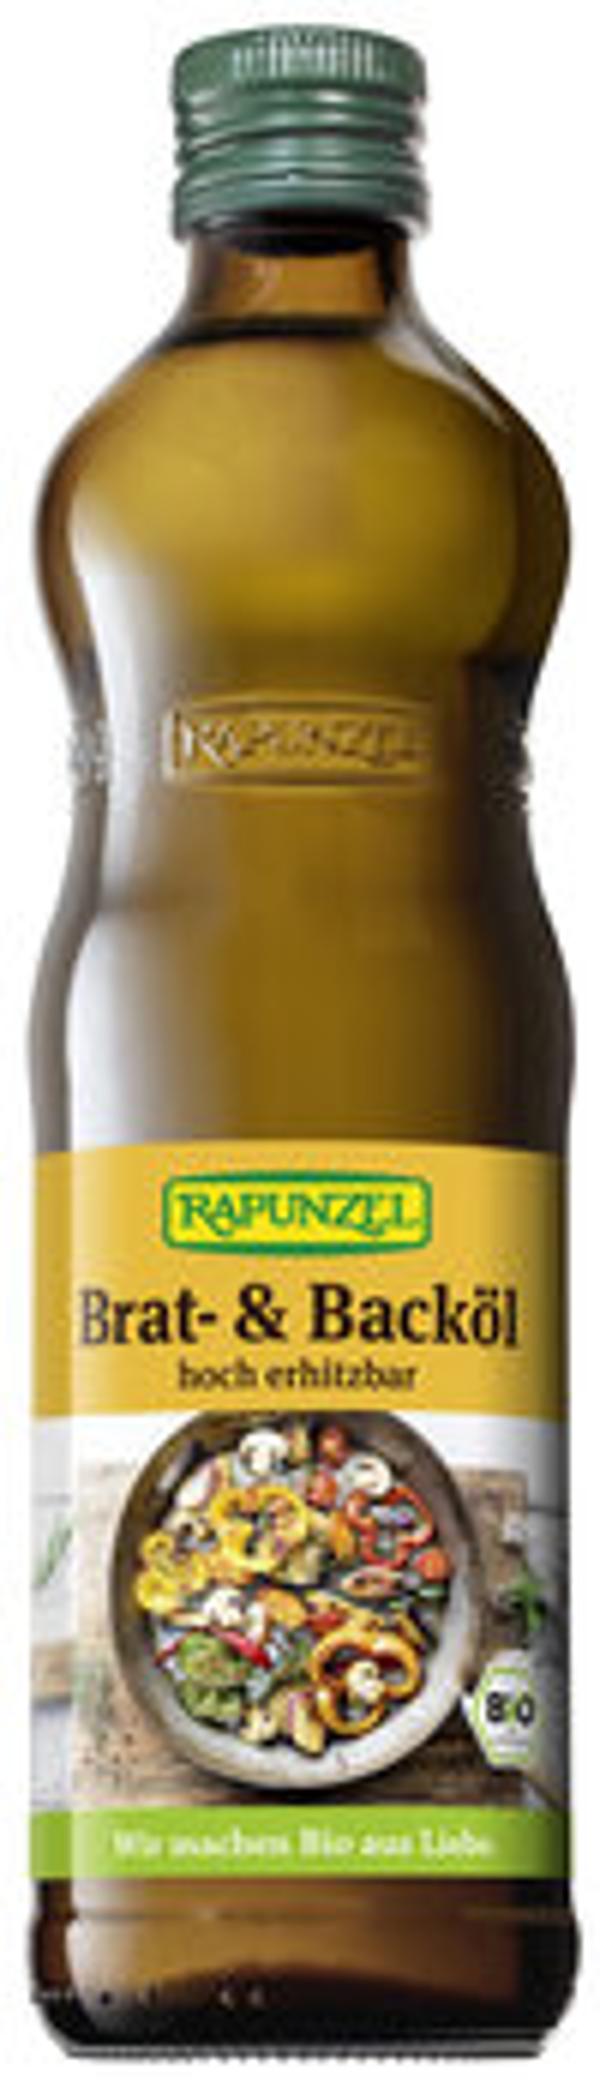 Produktfoto zu Rapunzel Brat- & Backöl 500ml